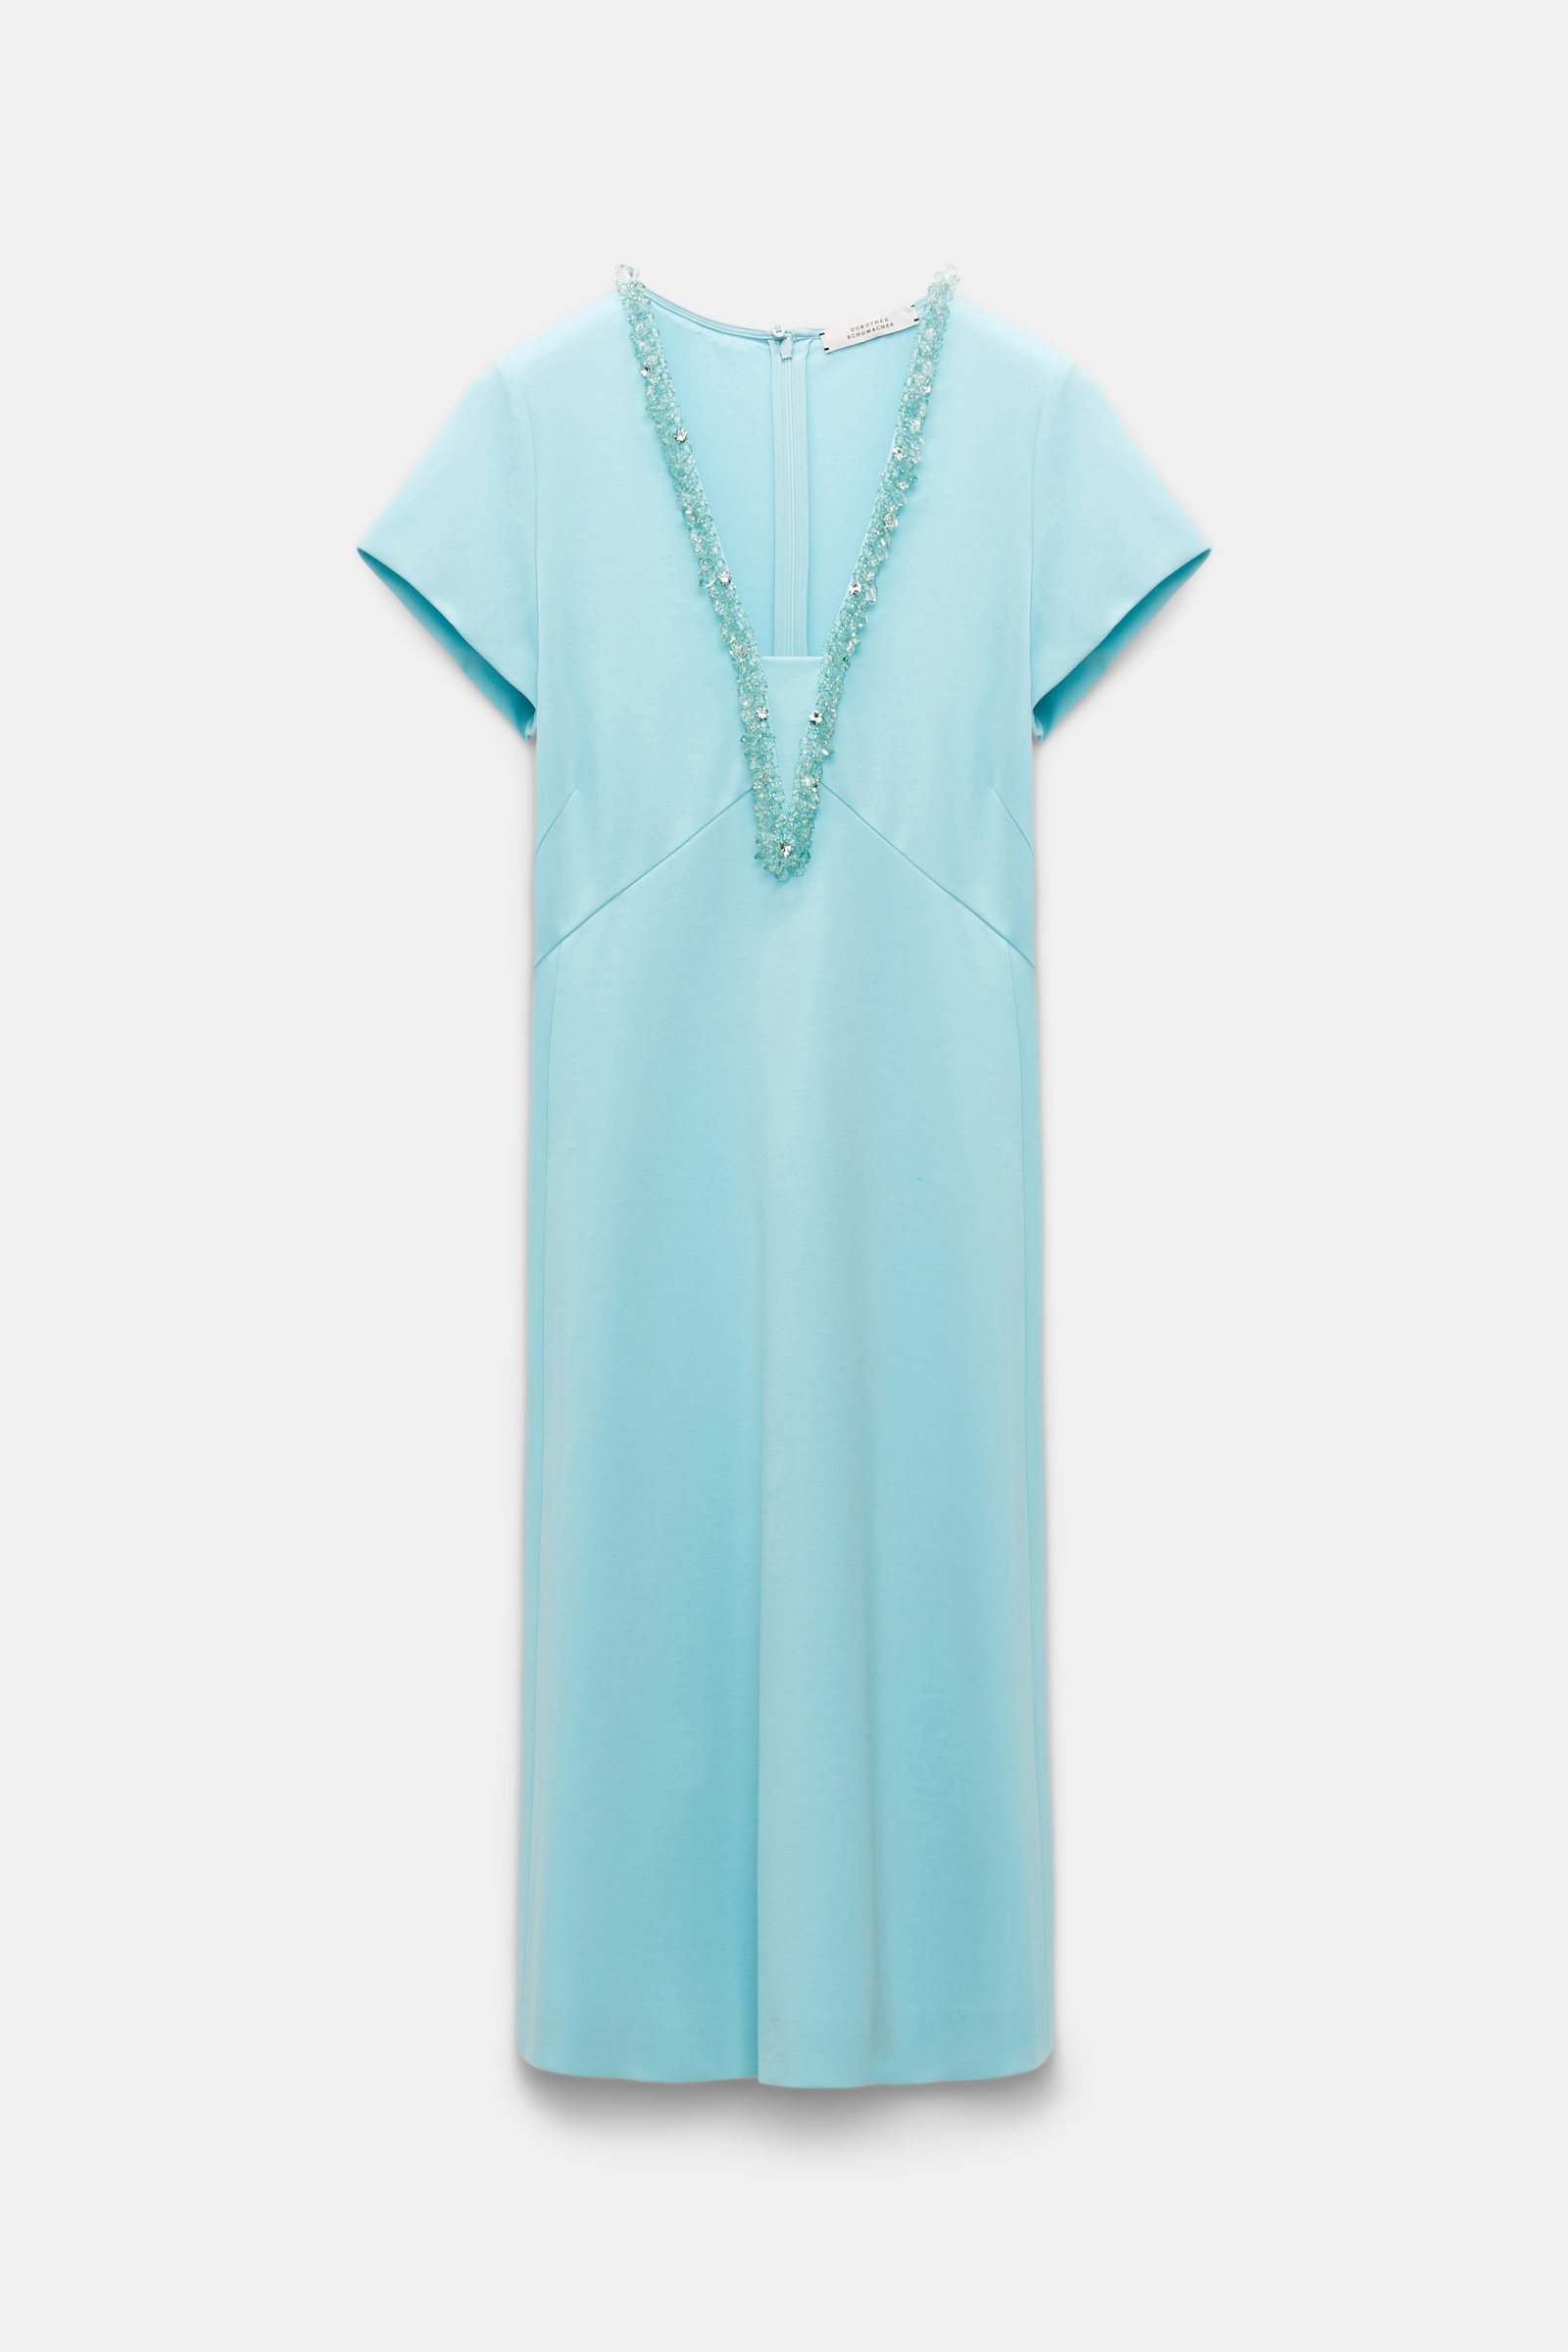 Dorothee Schumacher Punto Milano hourglass dress with embellished V-neckline soft turquoise